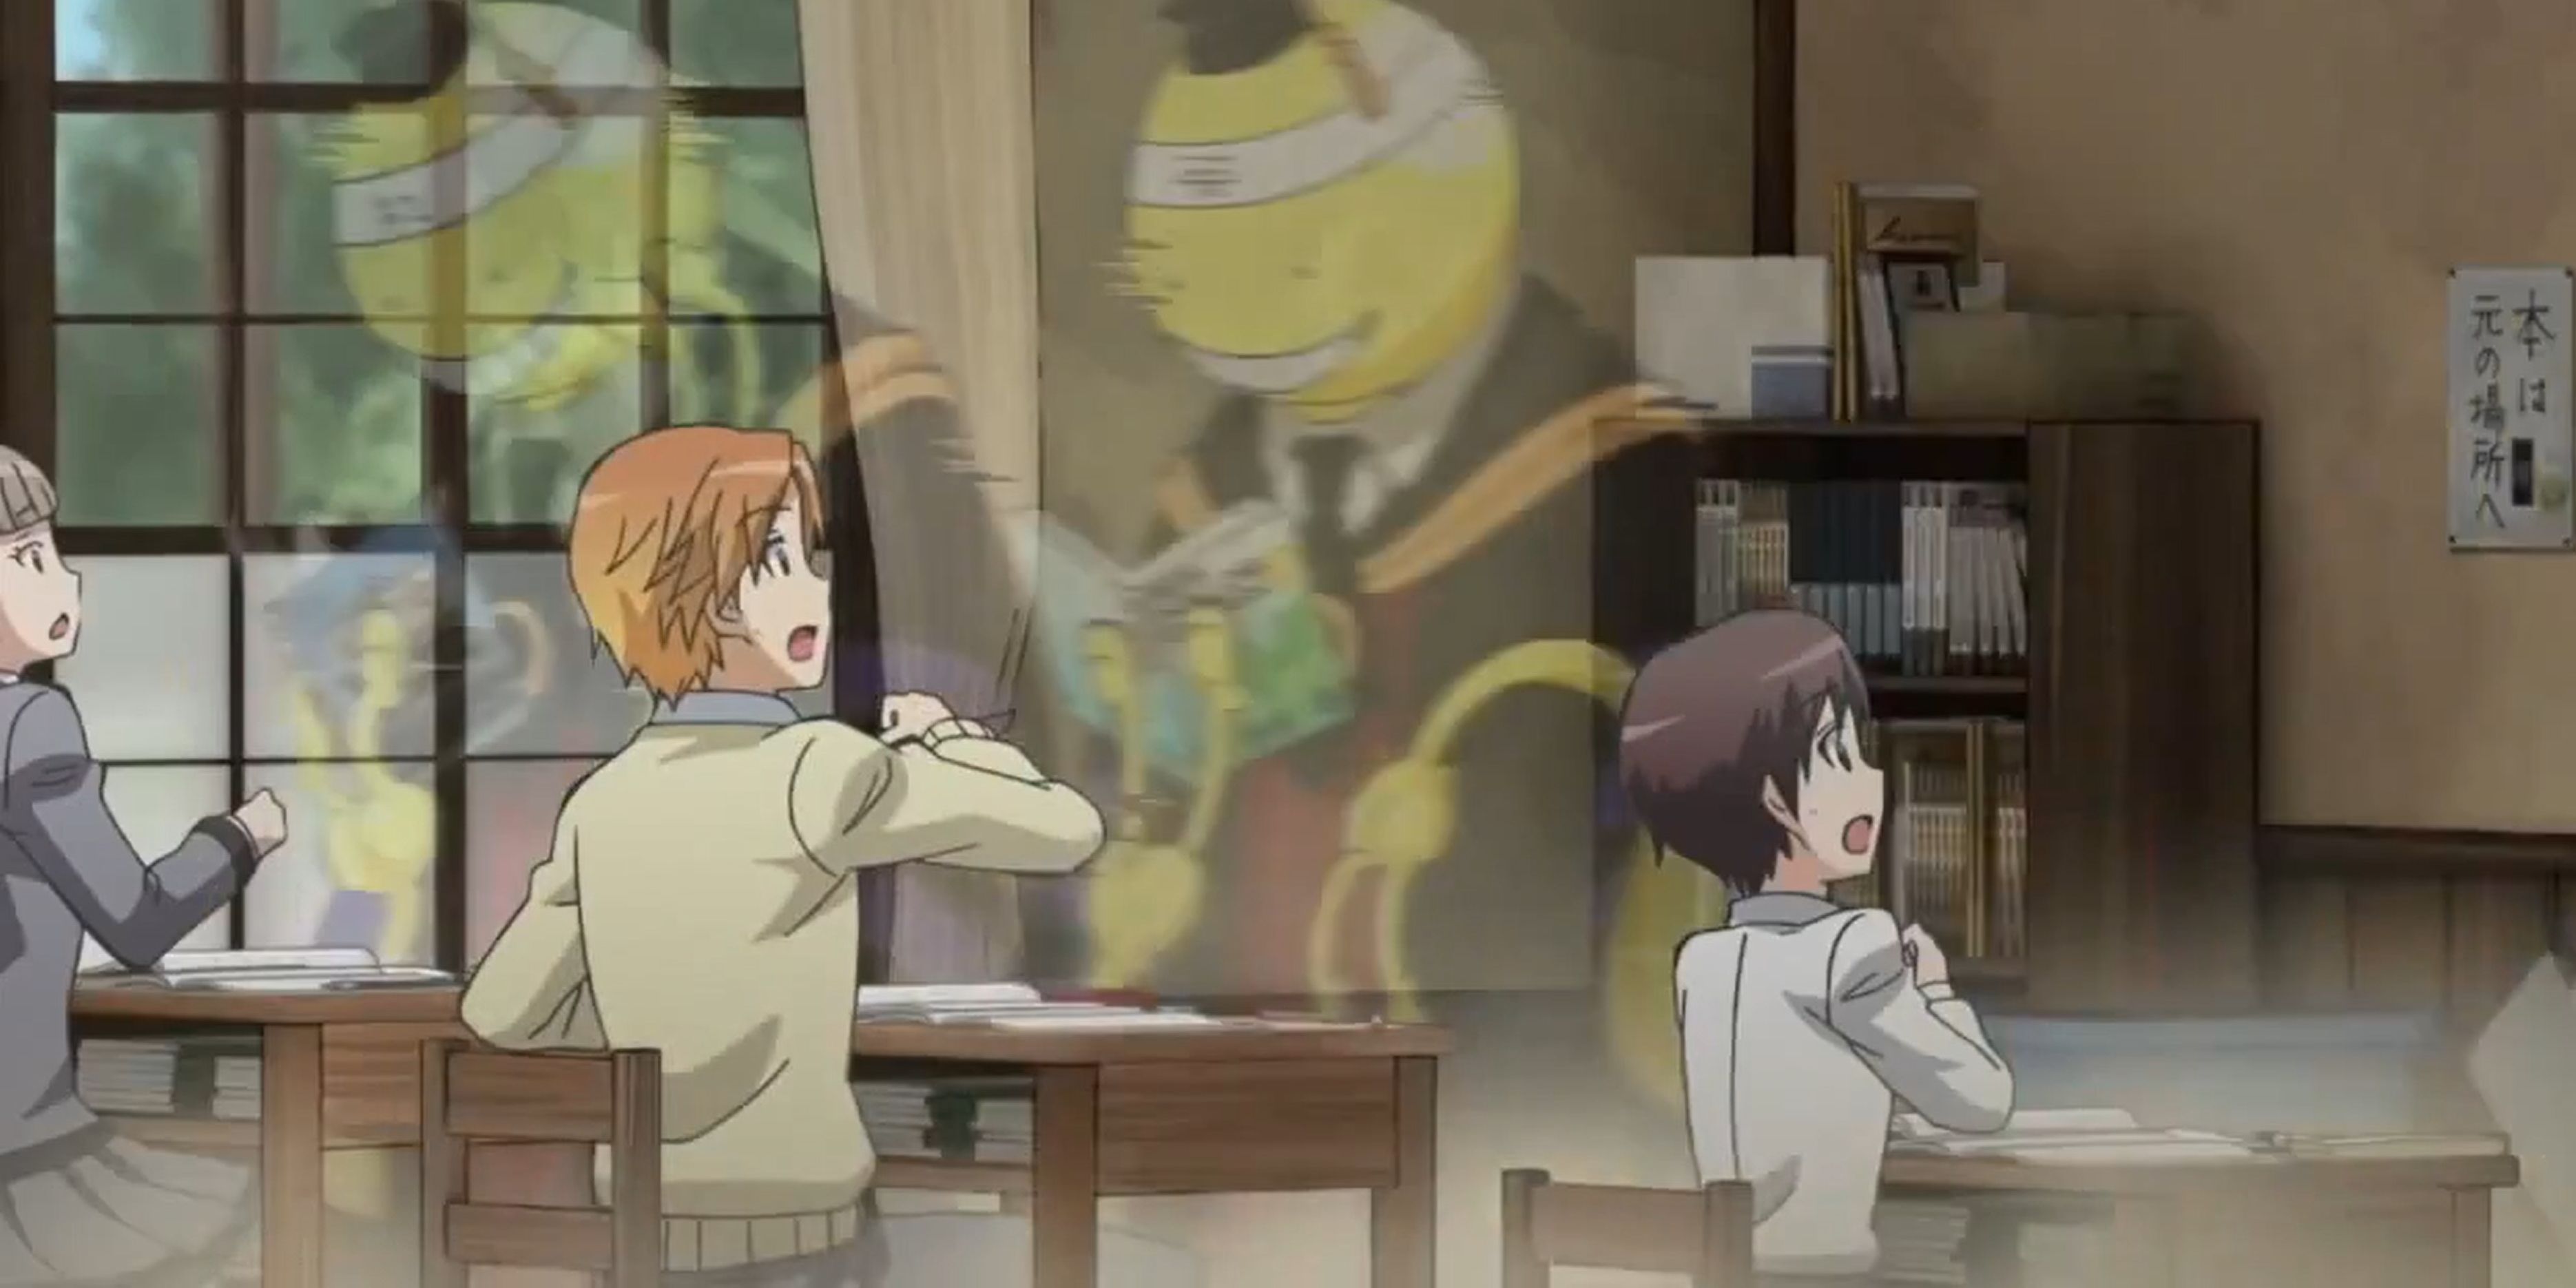 Anime Assassination Classroom Koro-Sensi After Image Studying